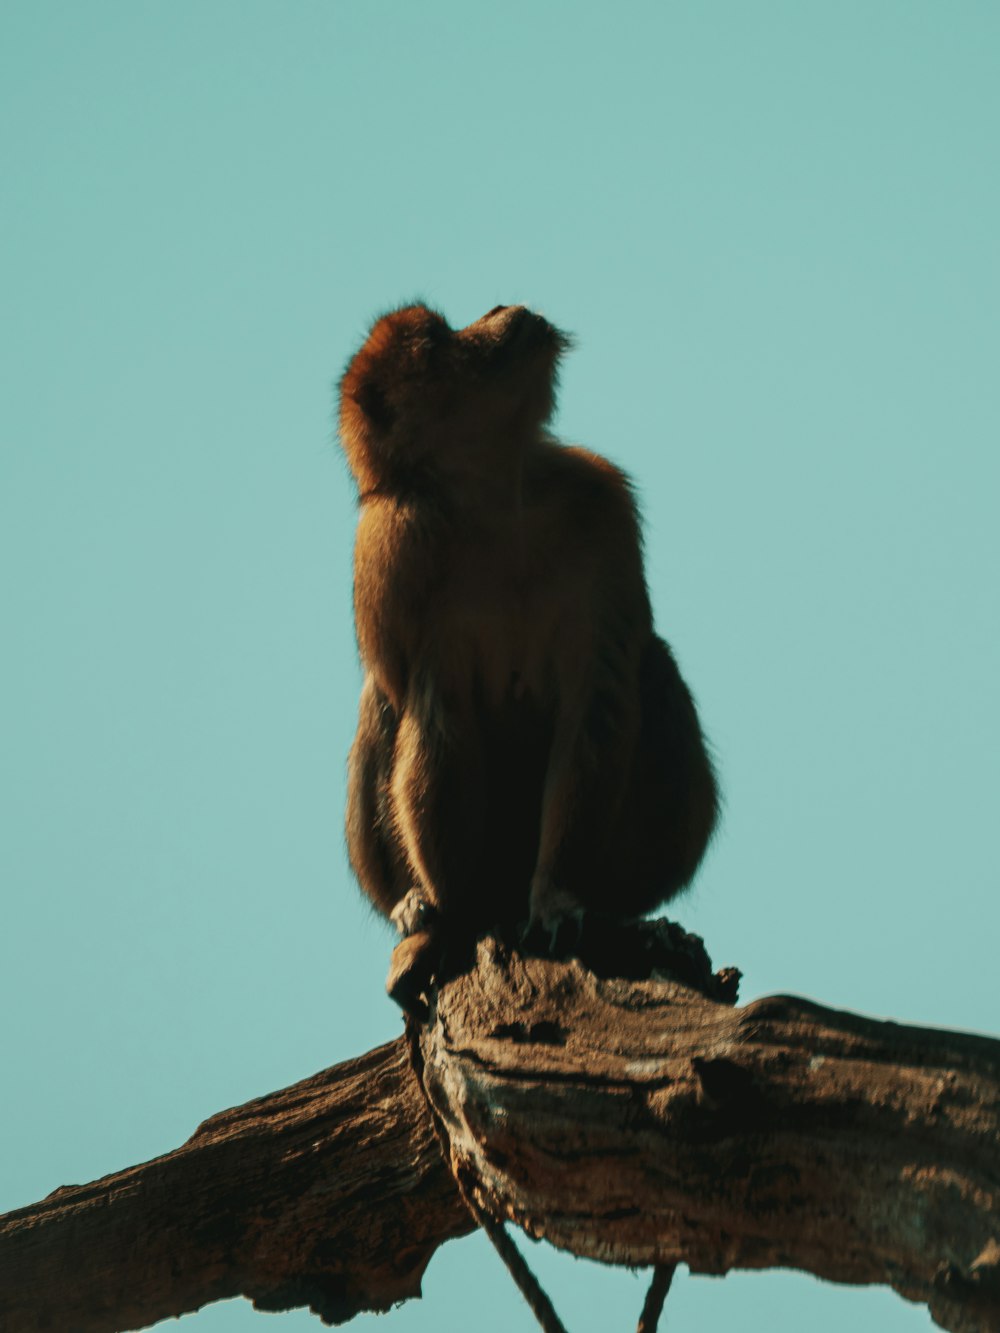 brown monkey sitting on brown wood log under blue sky during daytime